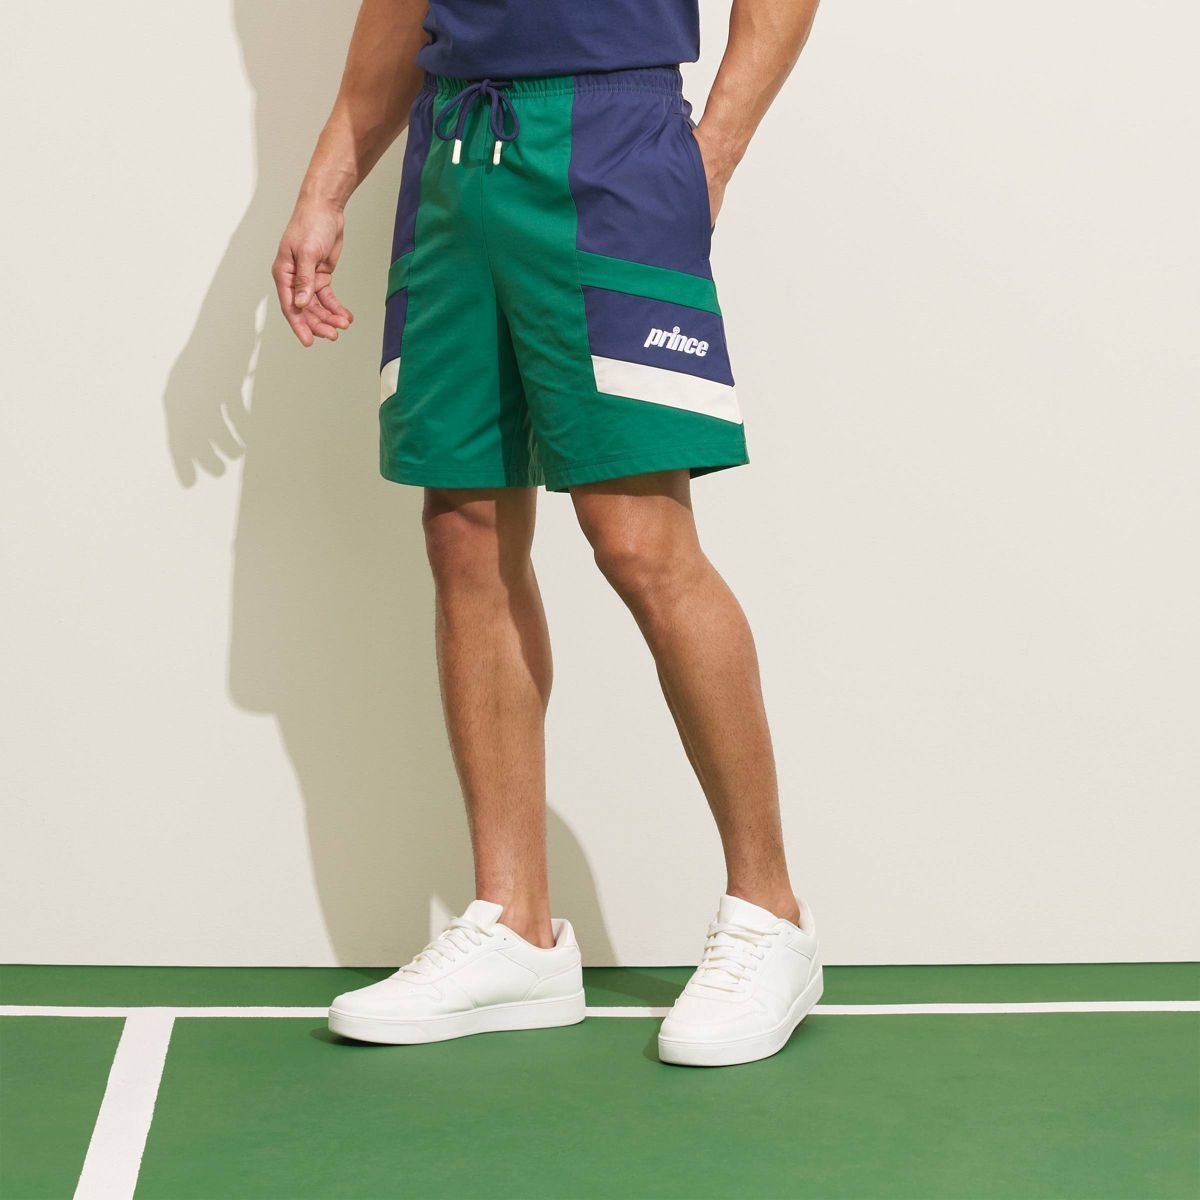 Prince Pickleball Men's Woven Shorts 7" - Green | Target